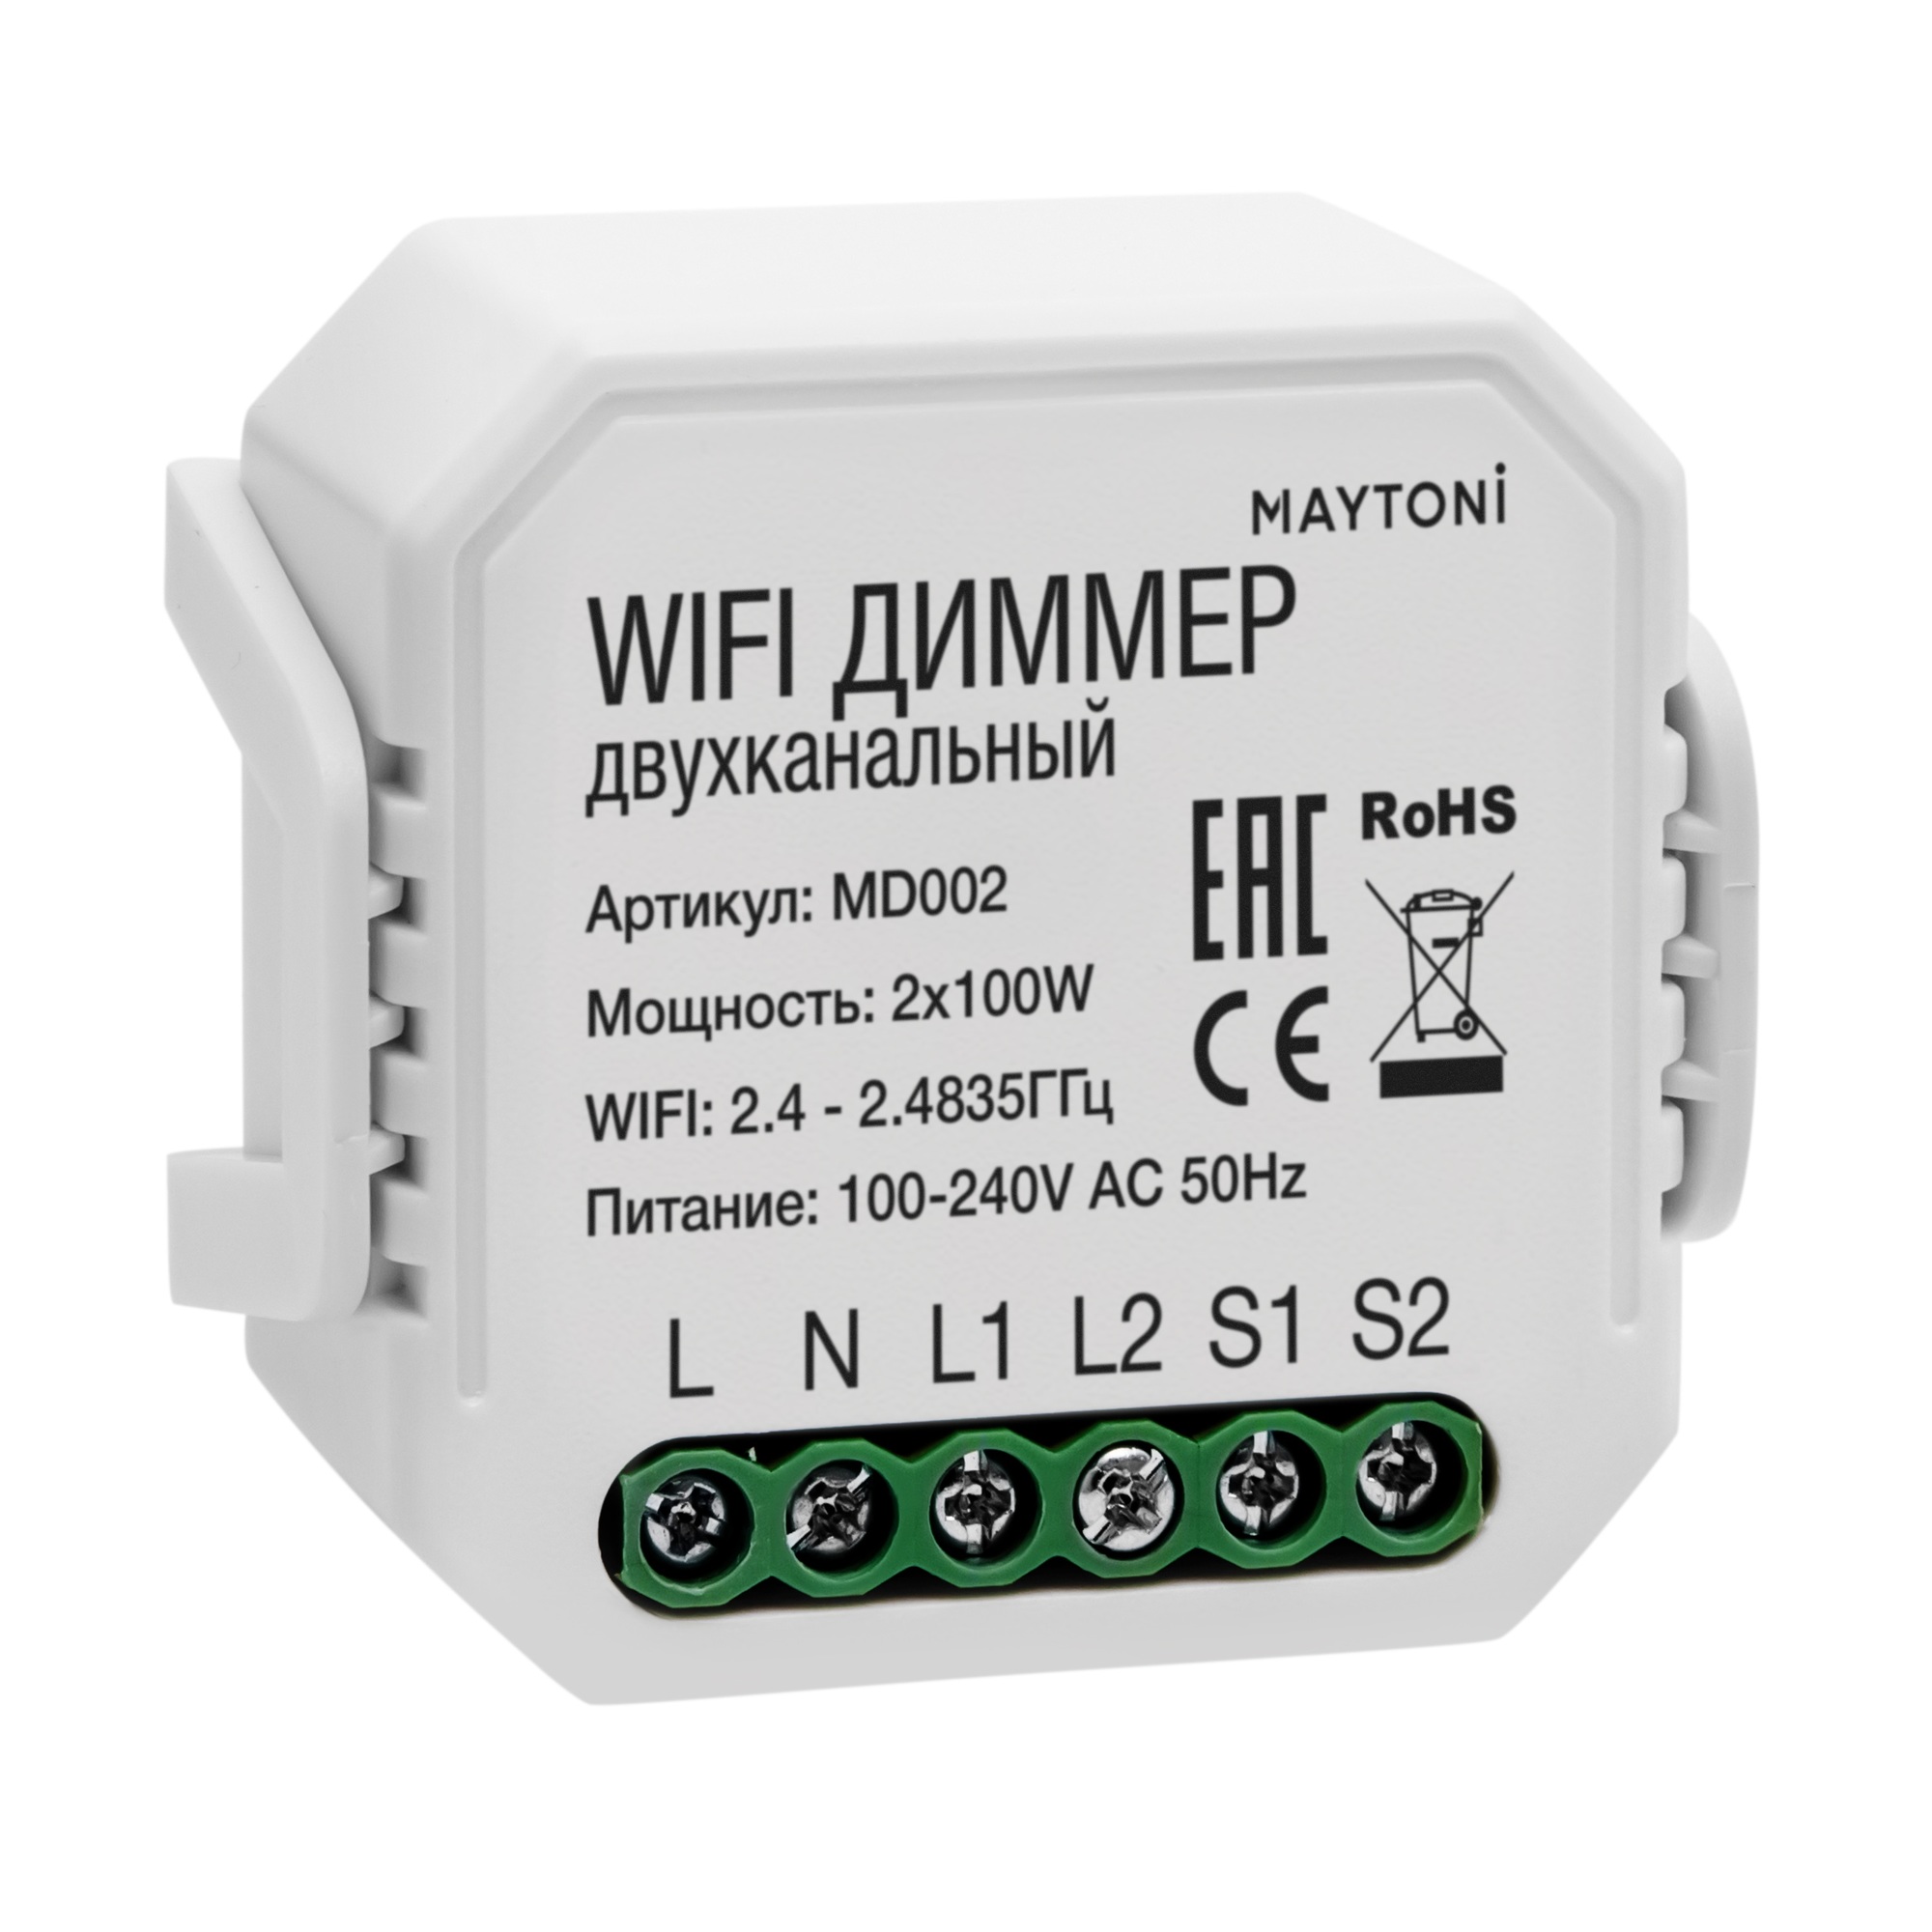 Wi-Fi диммер двухканальный 2x100W  MD002